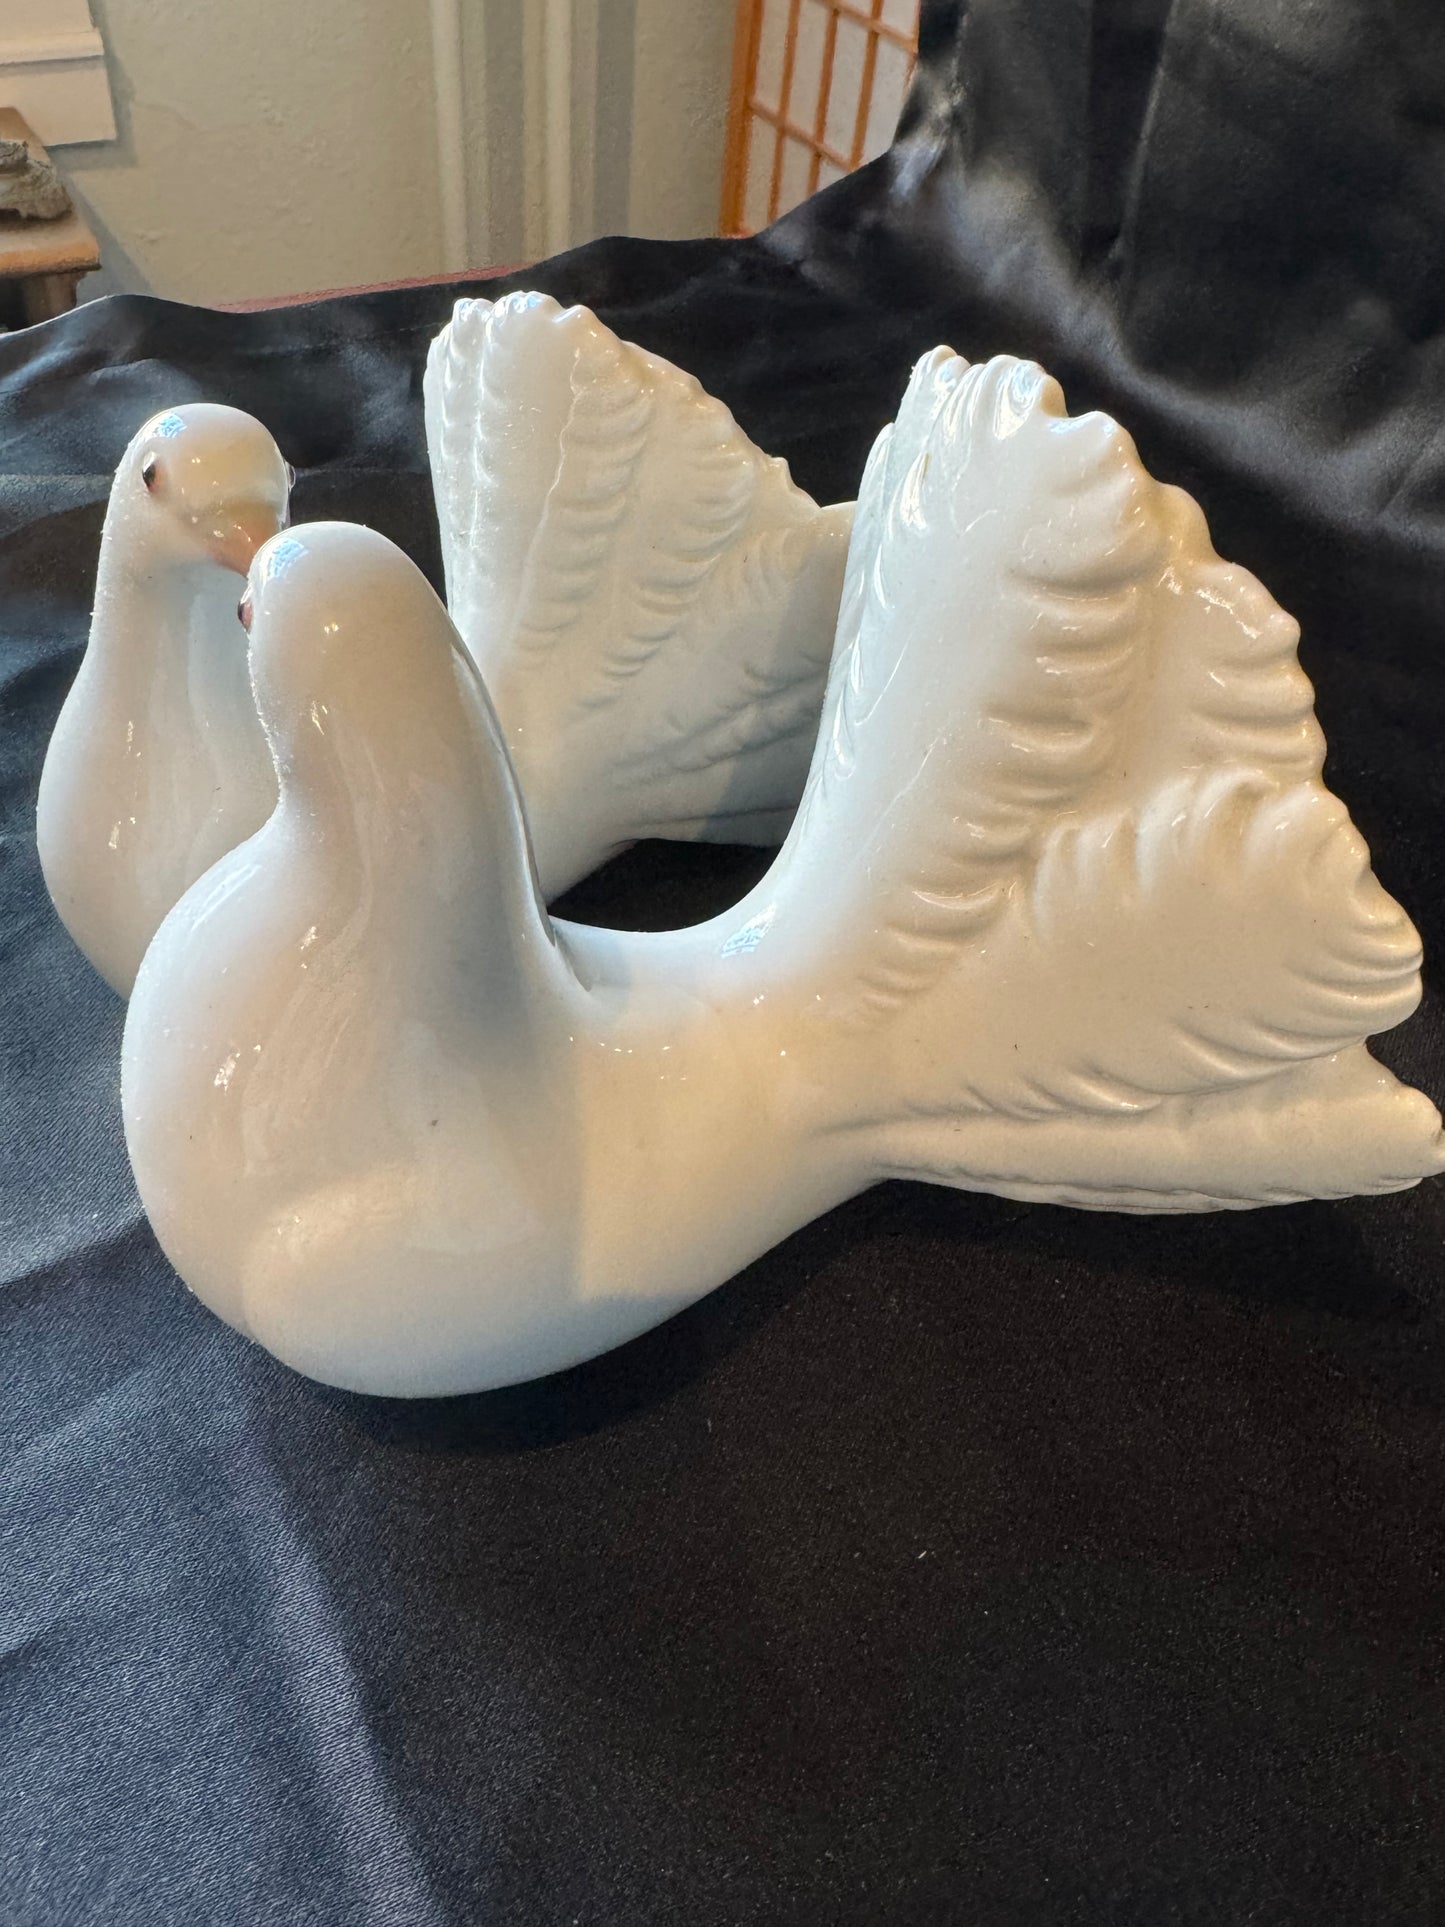 LLADRO Porcelain Figurine COUPLE OF DOVES # 1169 Love Birds with Original Box